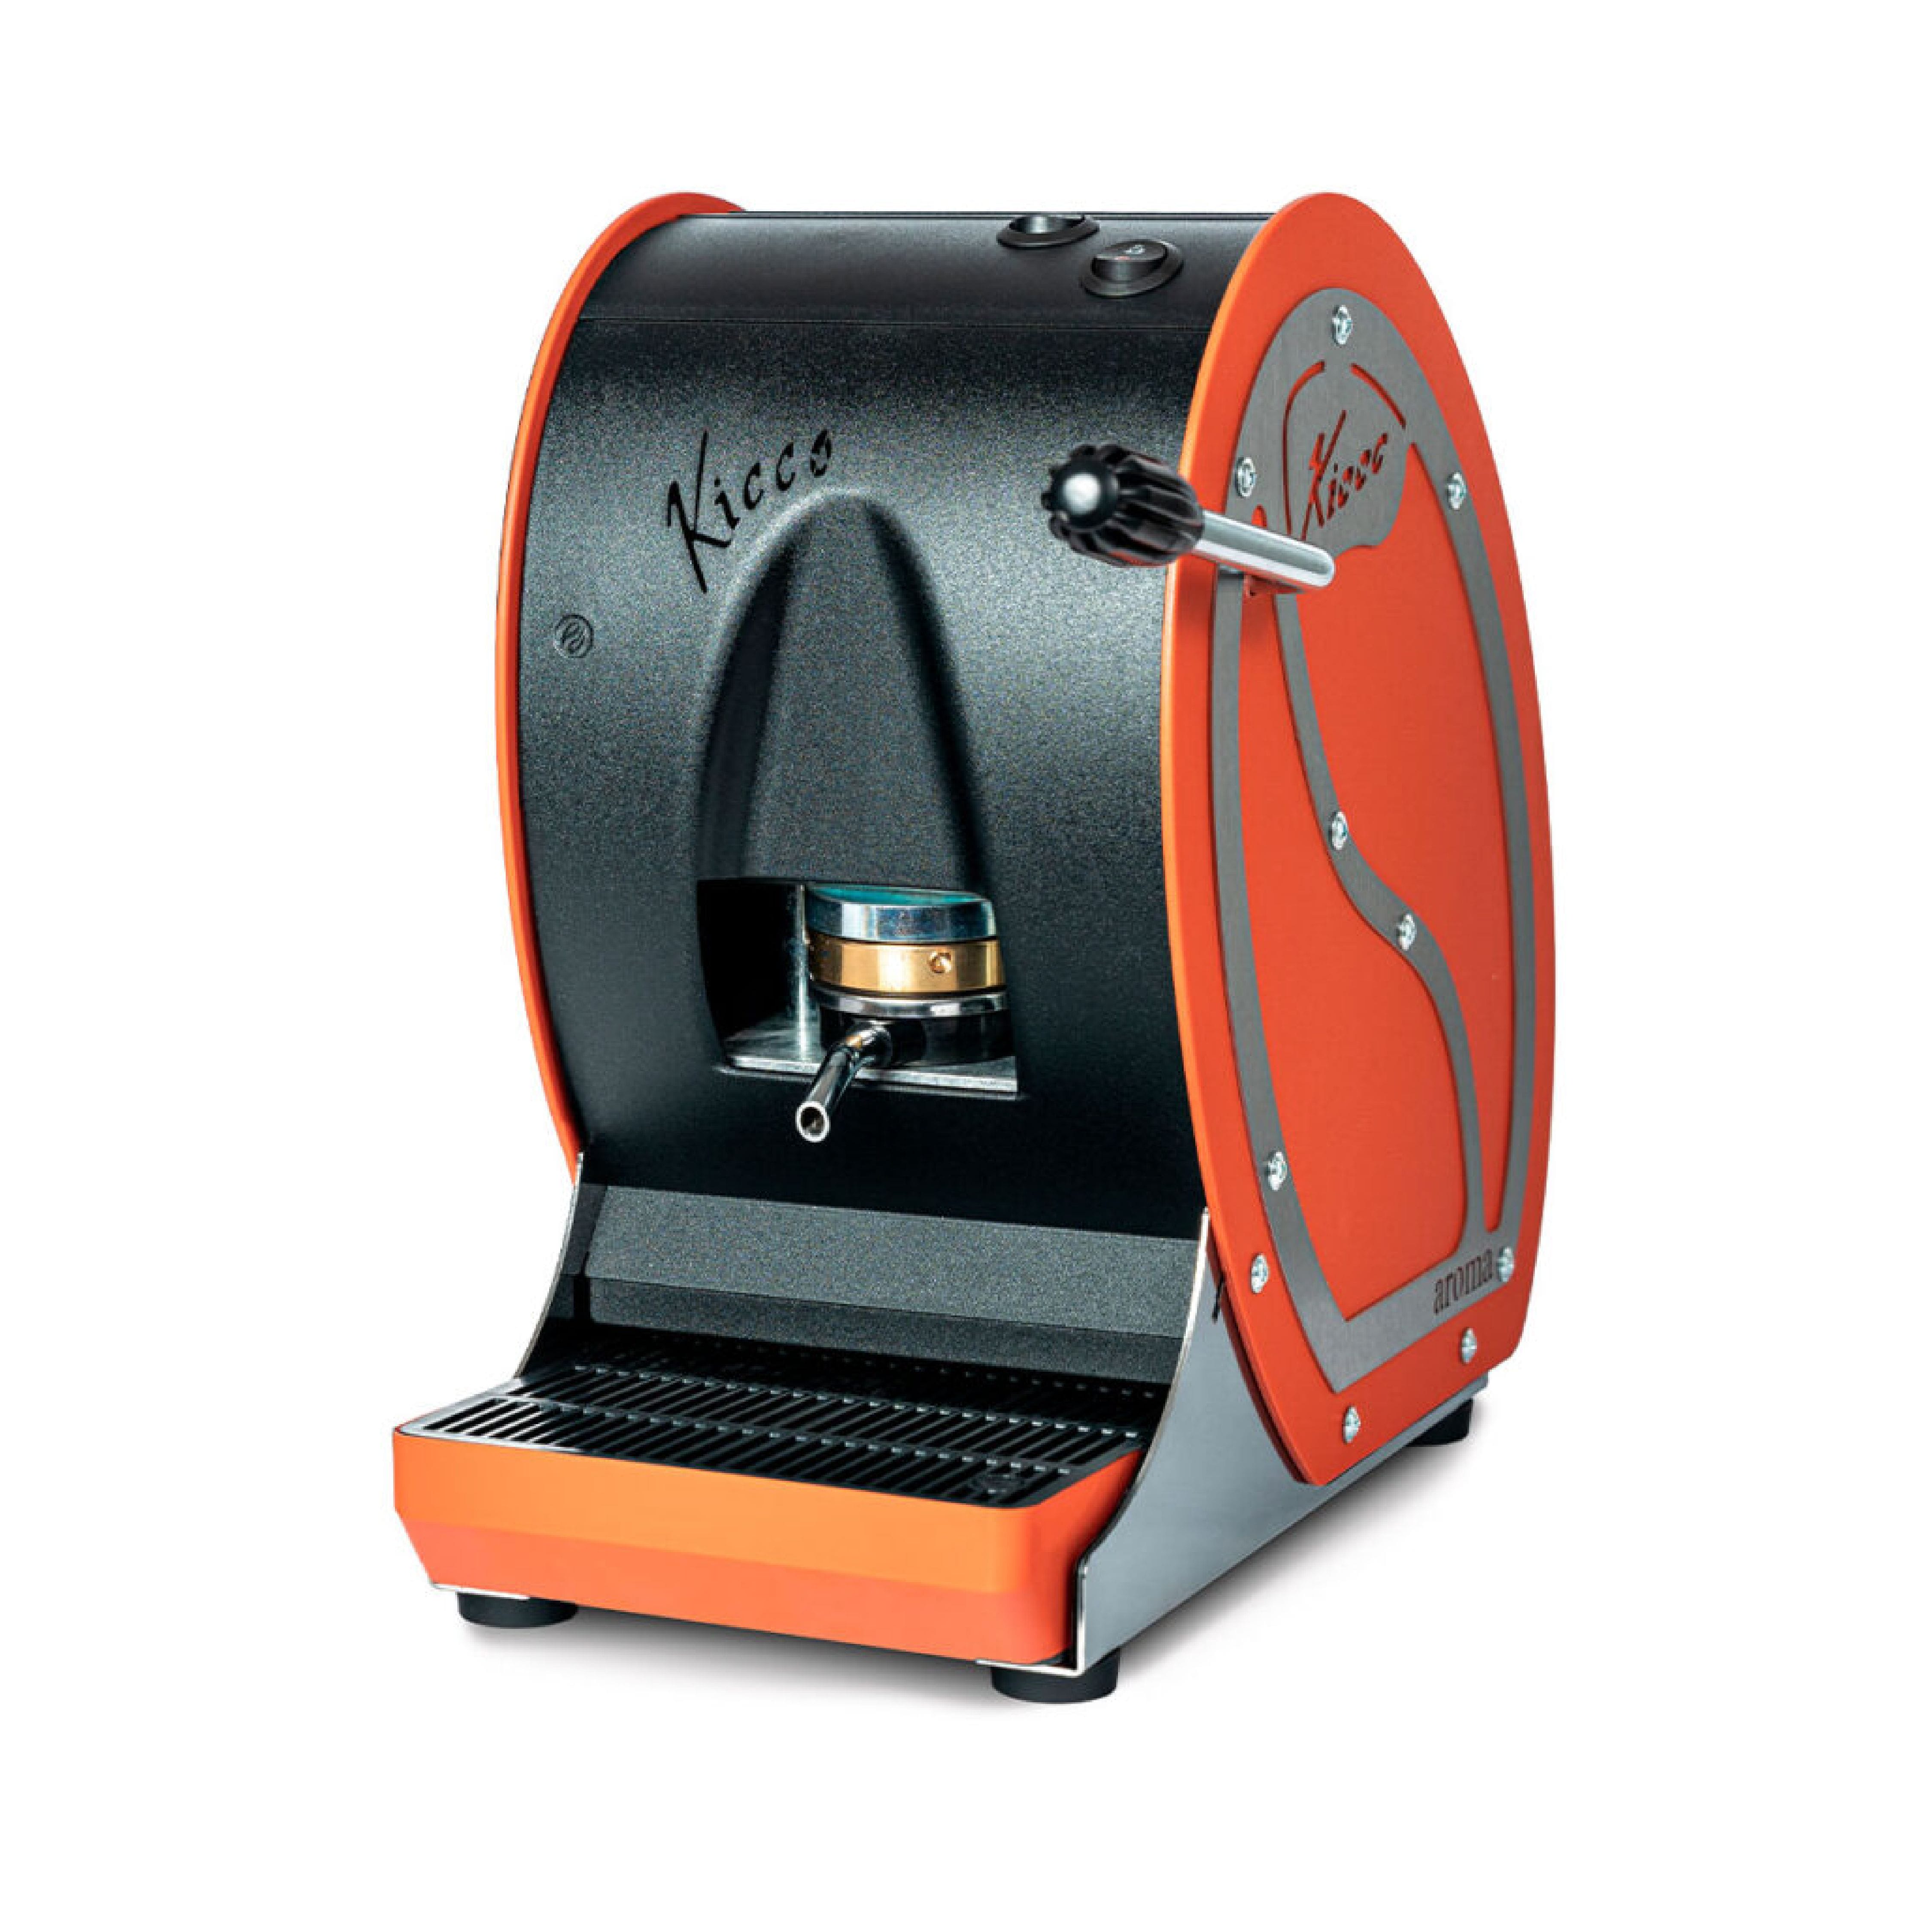 Macchina Caffe Mod. Kicco ABS Arancio 01